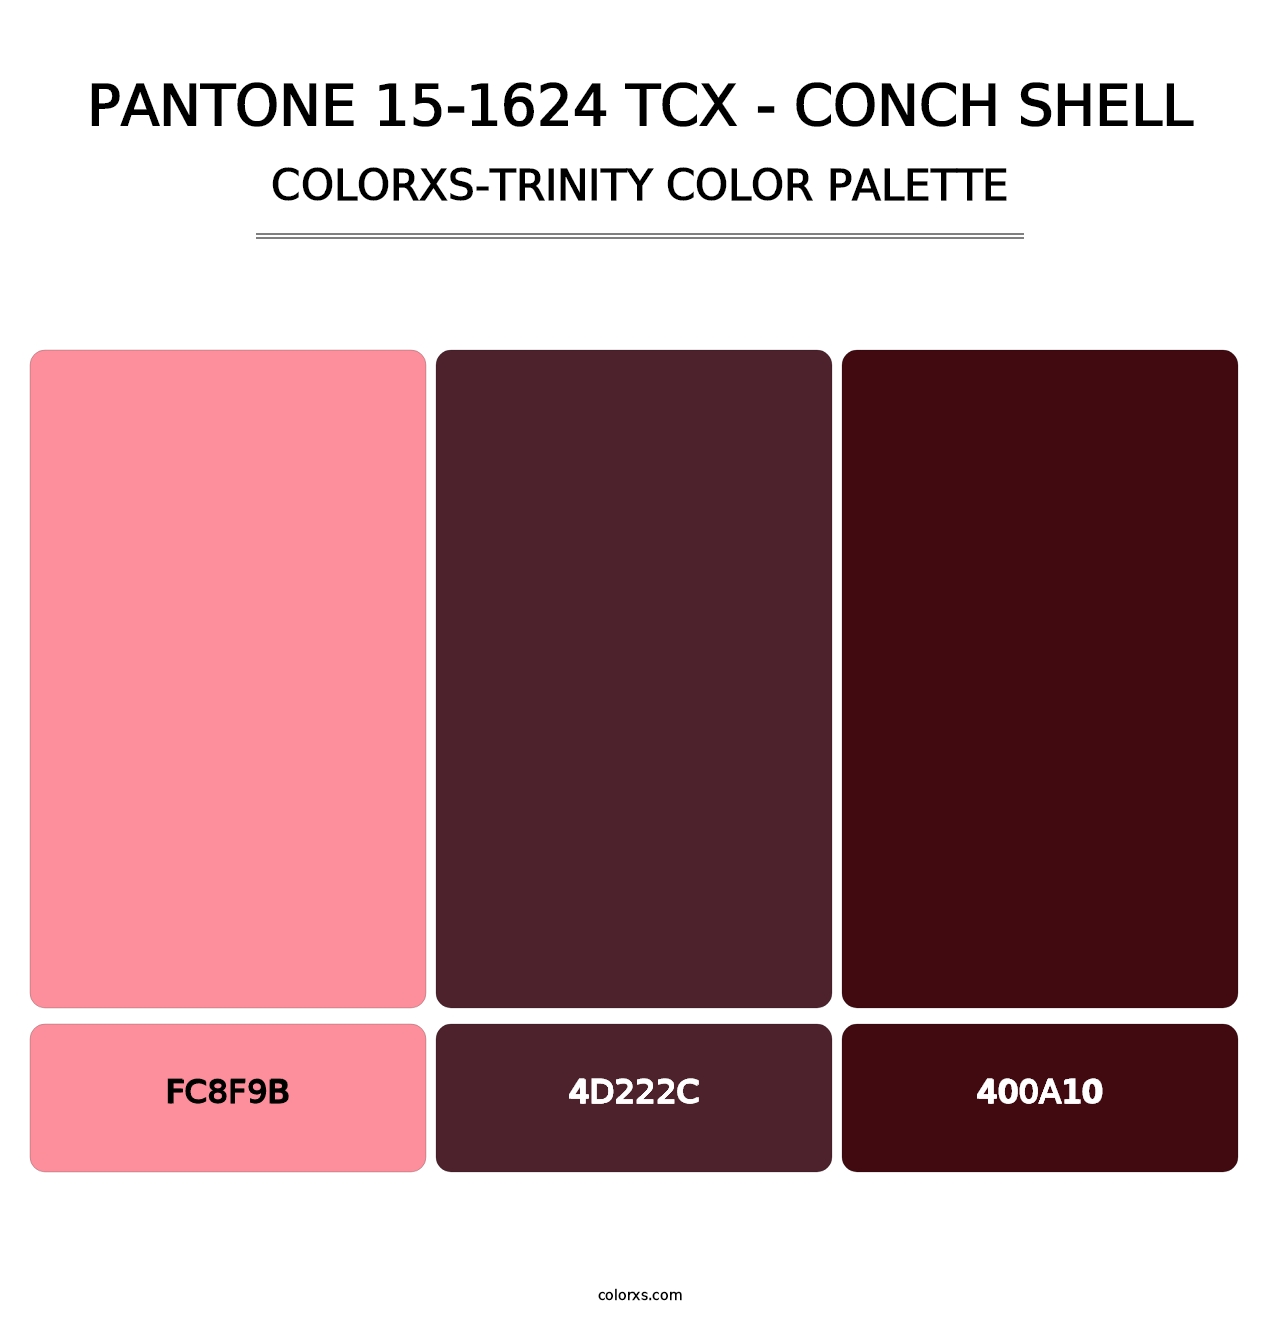 PANTONE 15-1624 TCX - Conch Shell - Colorxs Trinity Palette